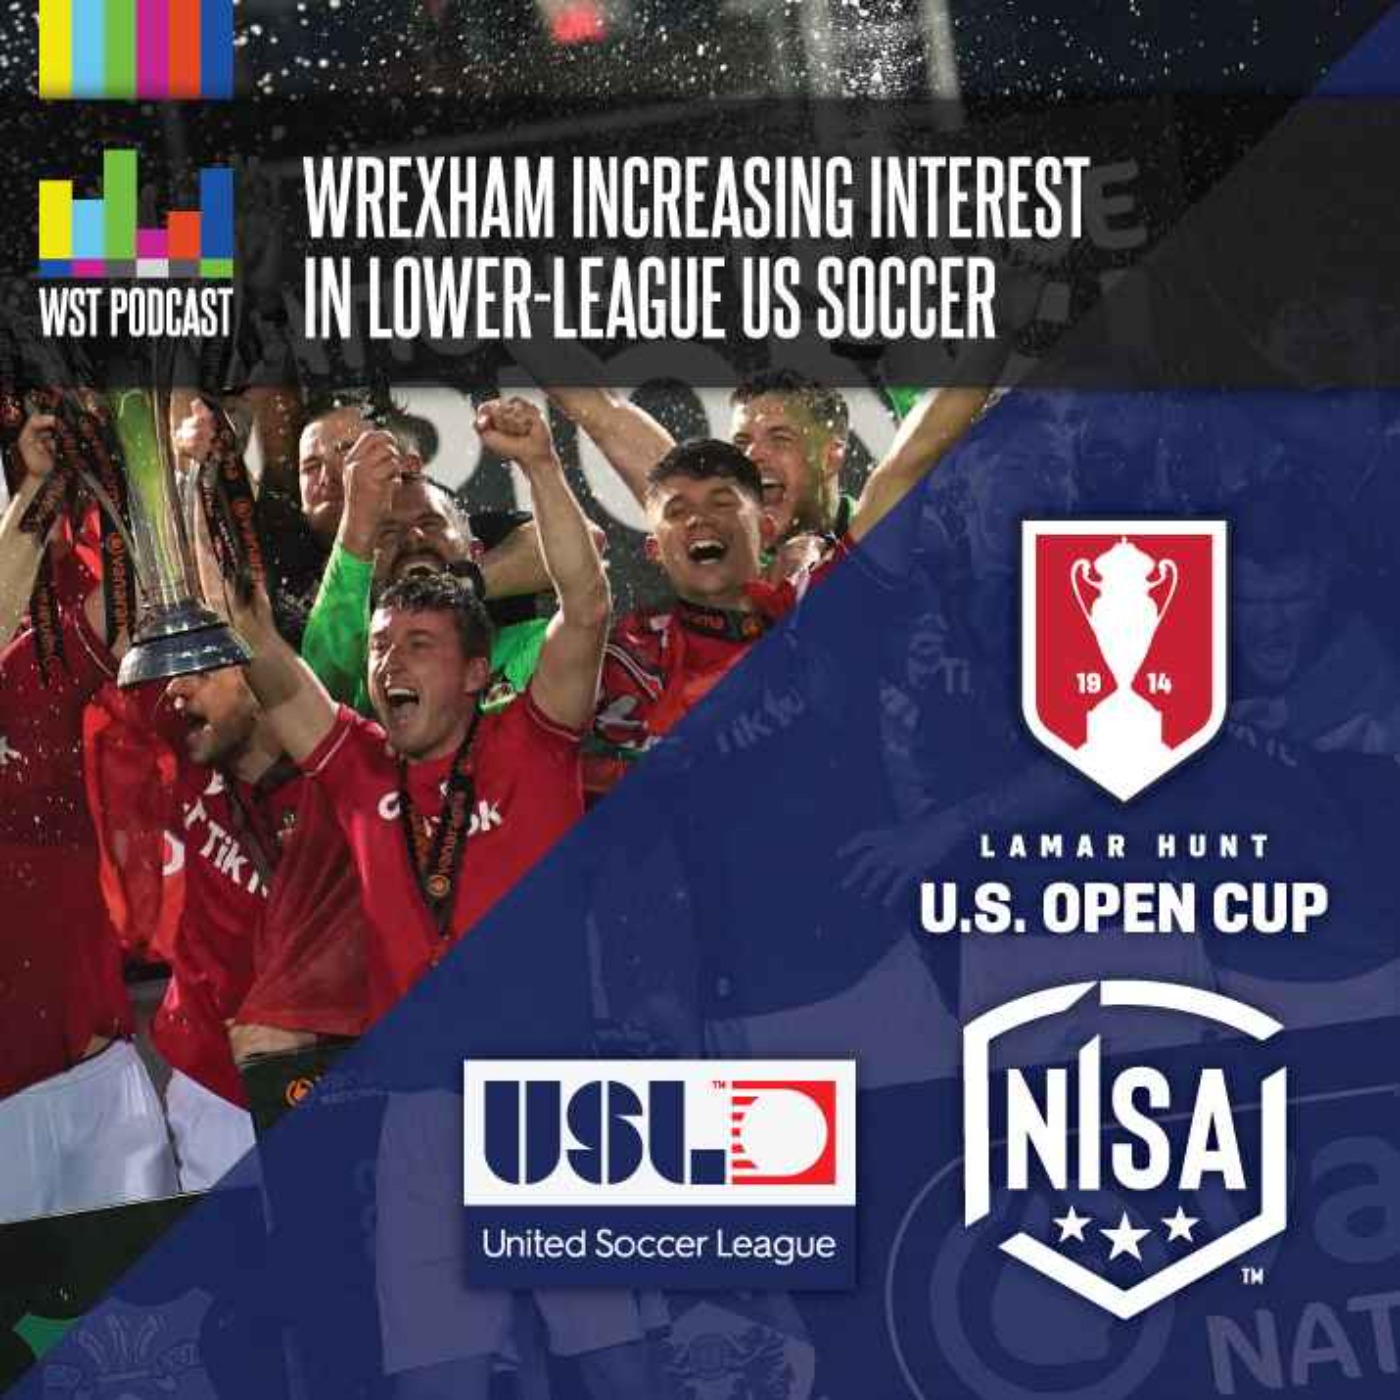 Wrexham Increasing Interest in Lower-League US Soccer